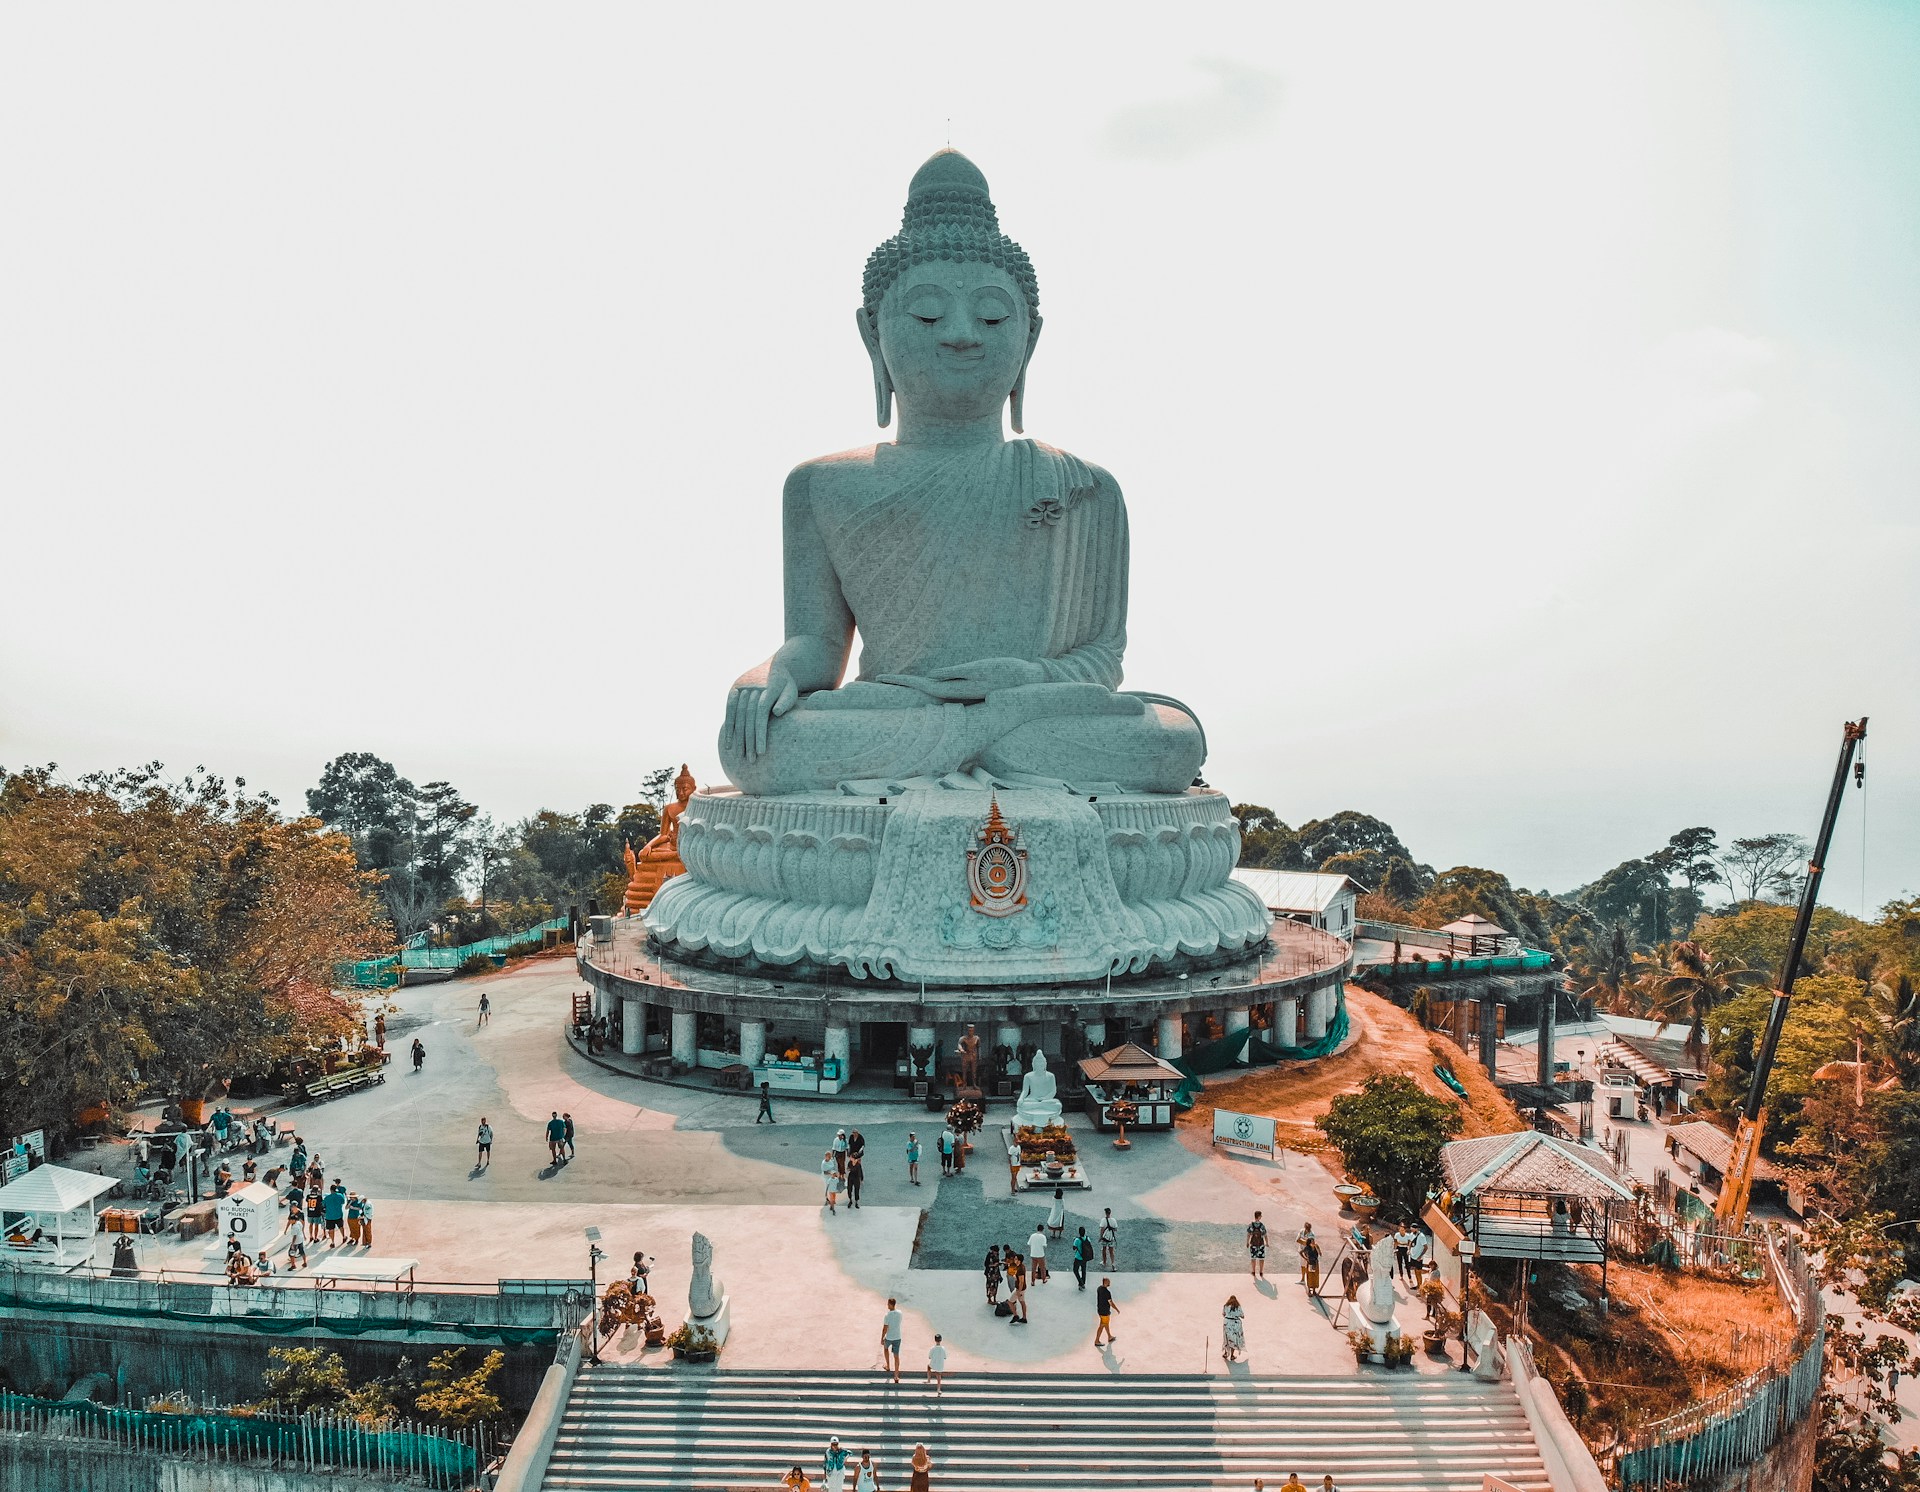 Image of the Big Buddha in Phuket.